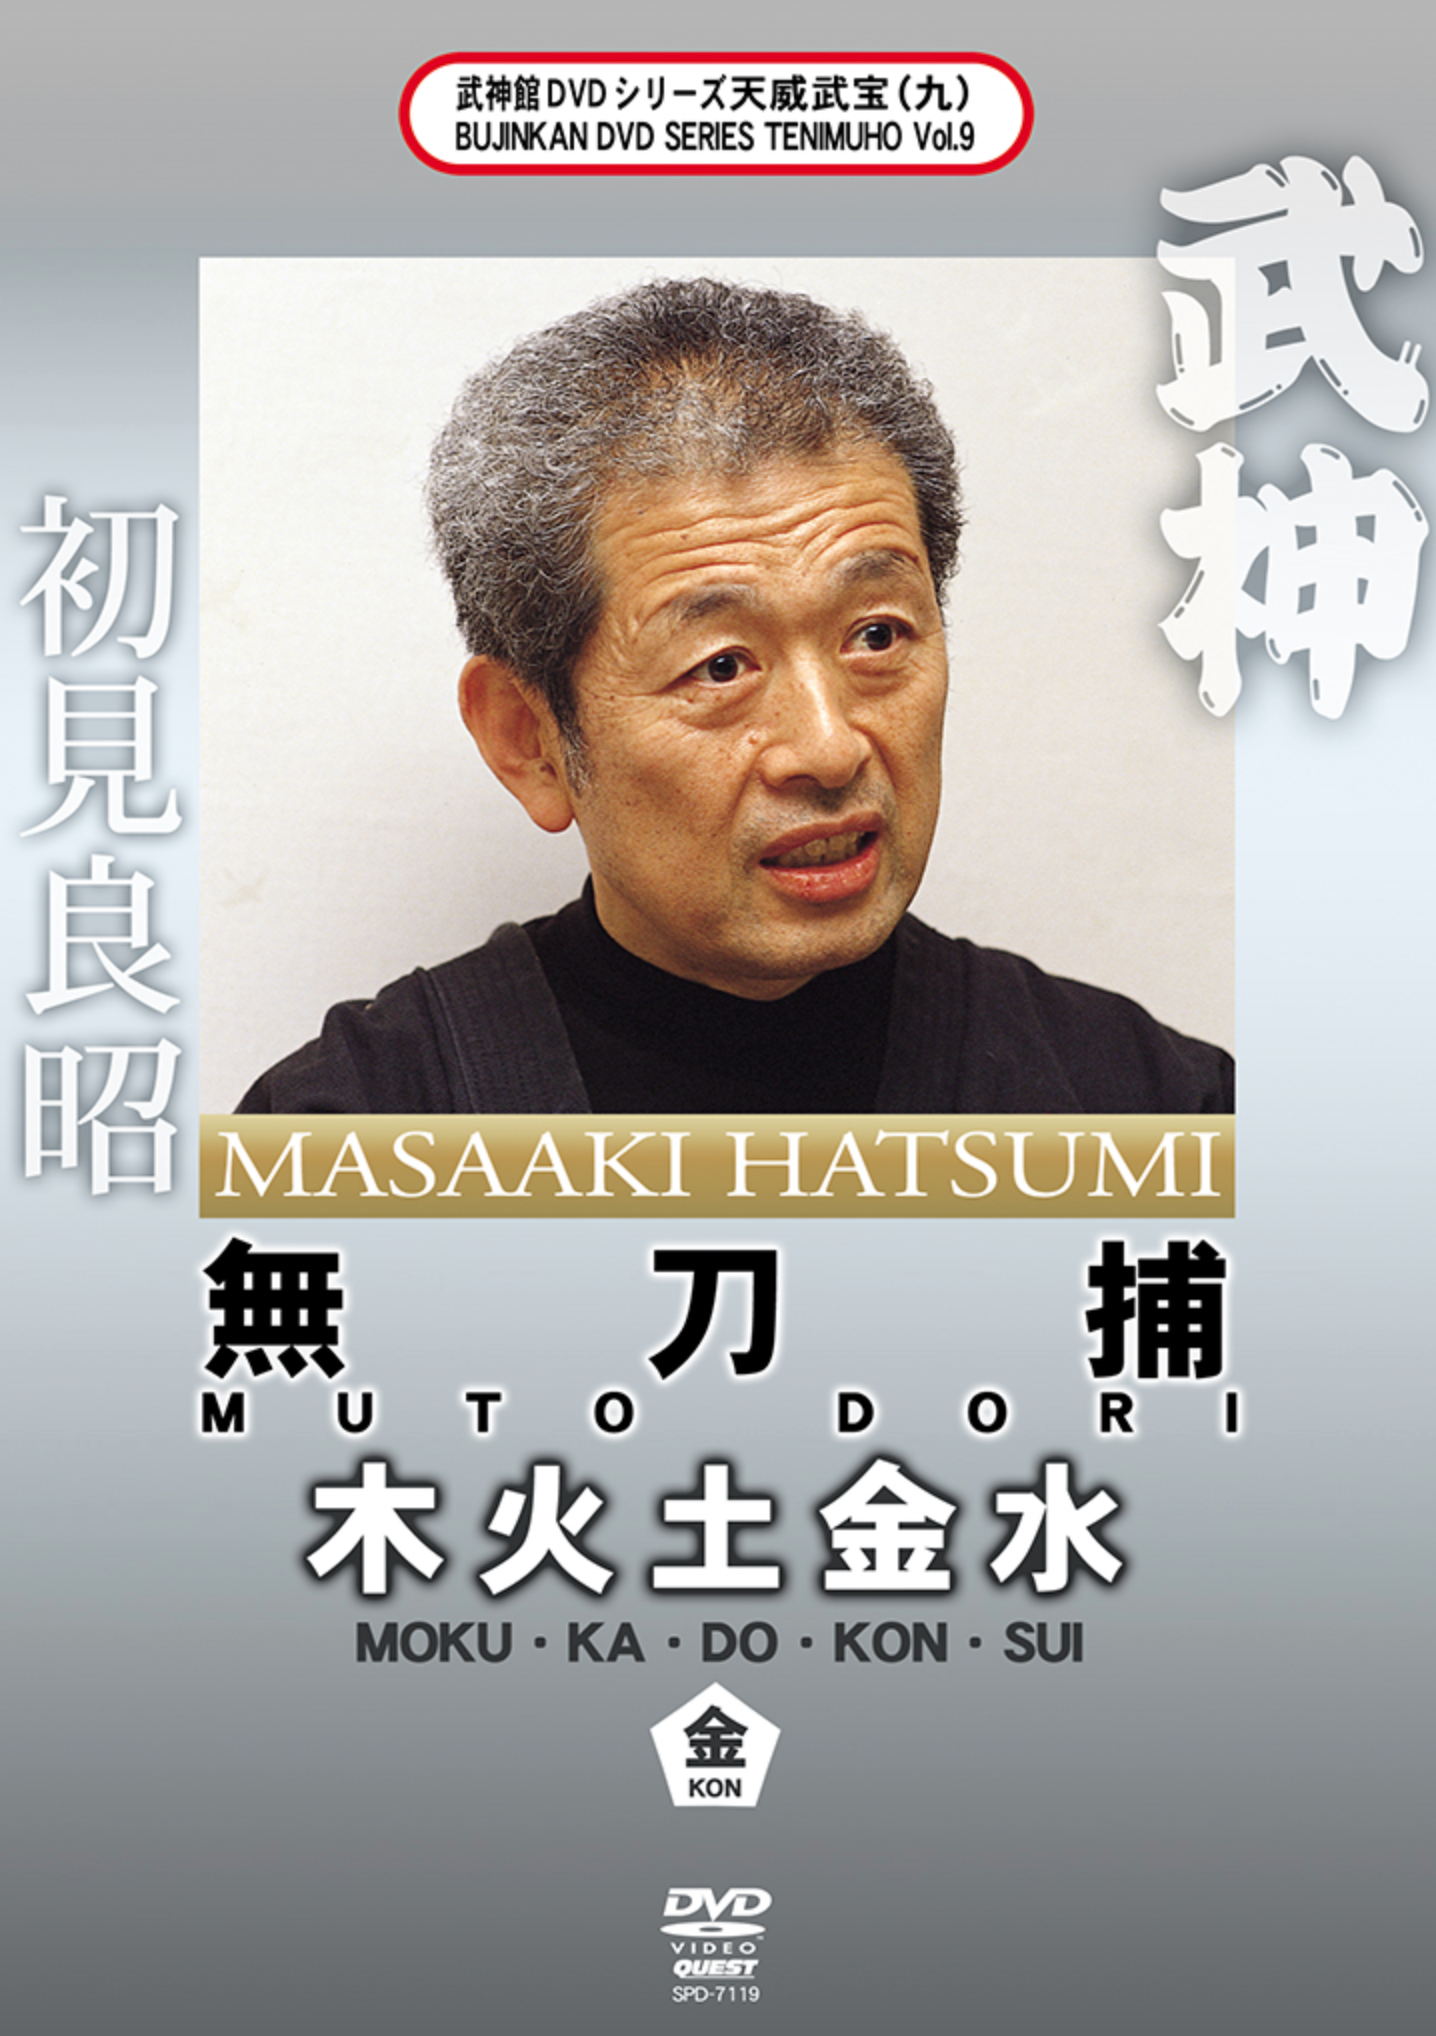 Bujinkan Tenmuho DVD 9 Mutodori Kon with Masaaki Hatsumi